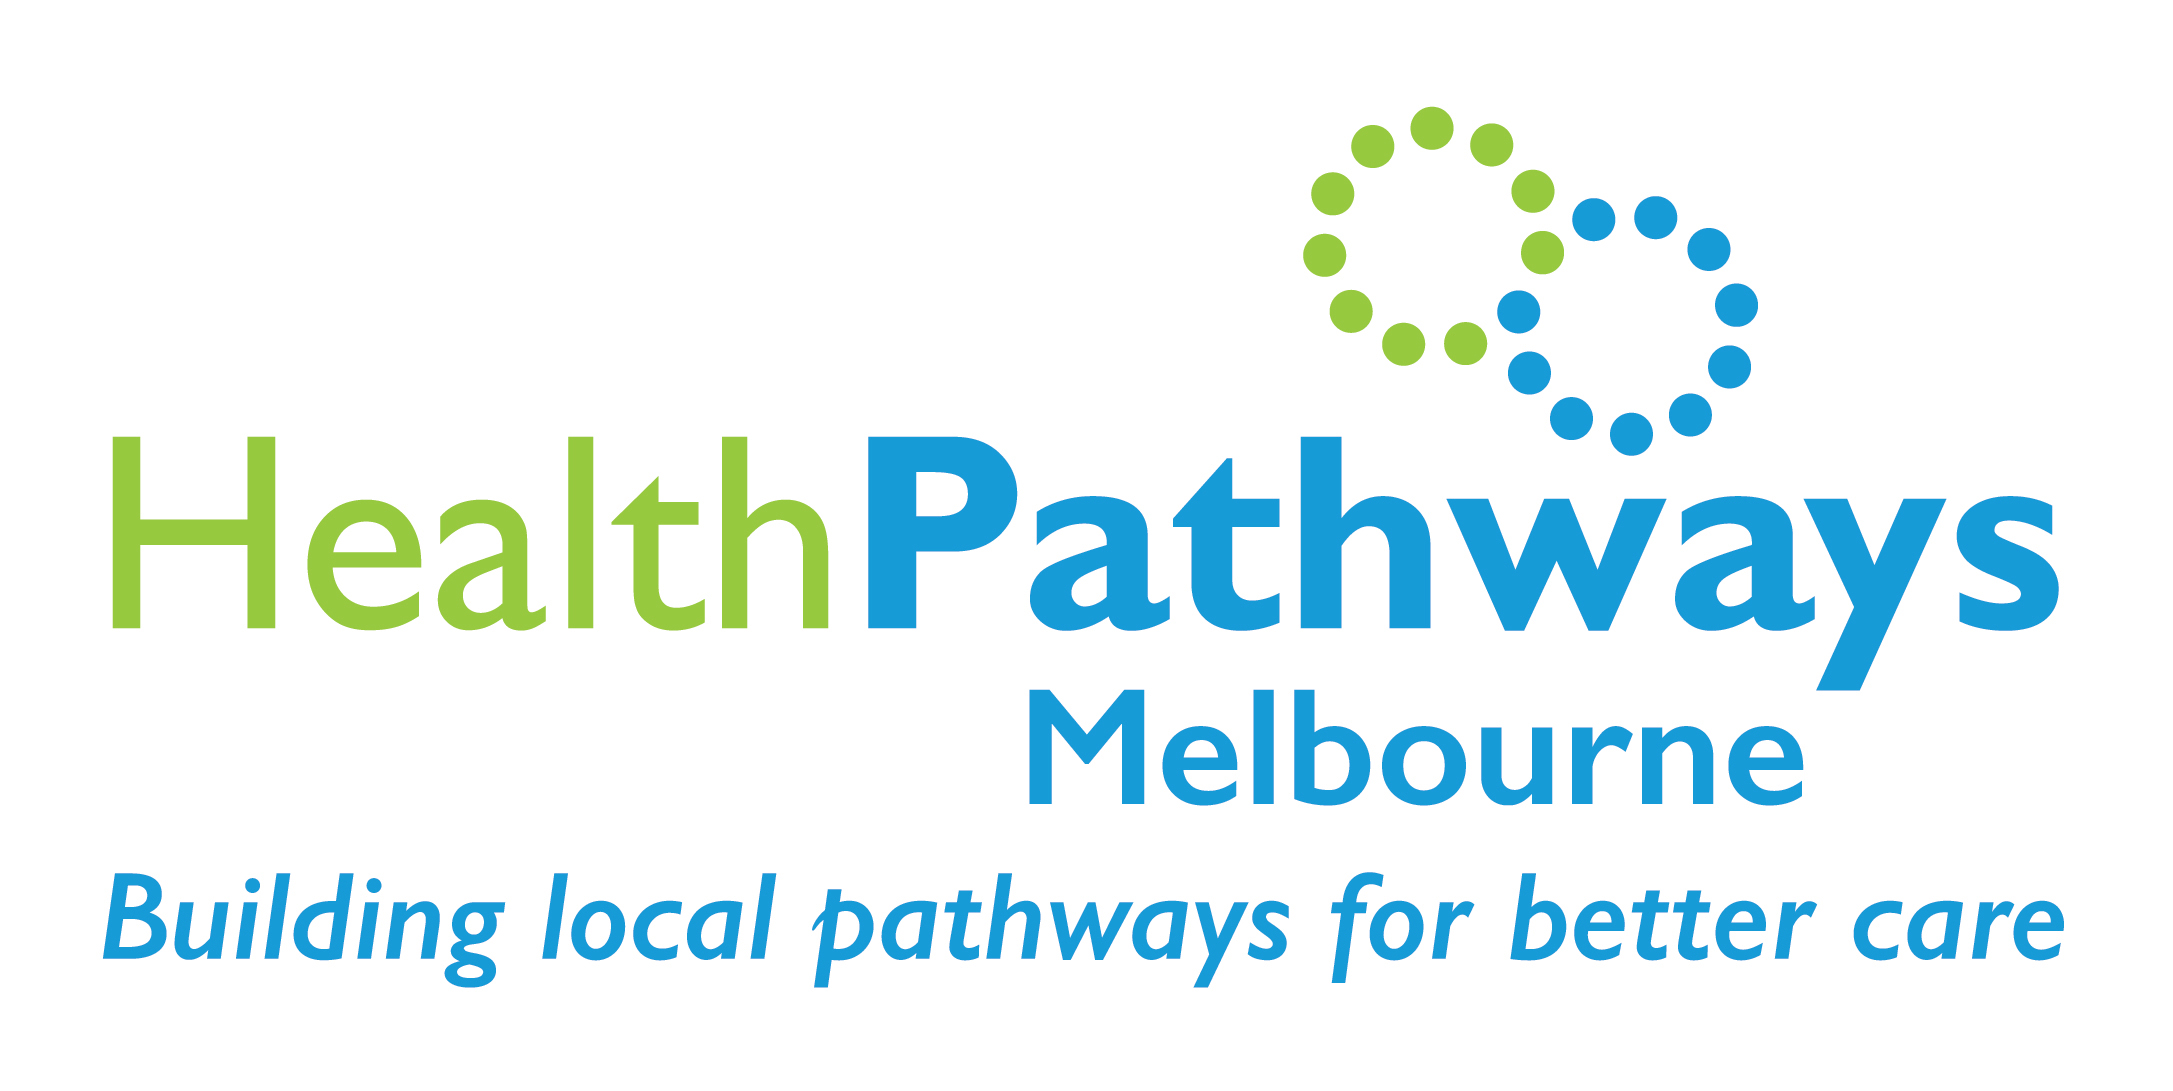 HealthPathways in the Community